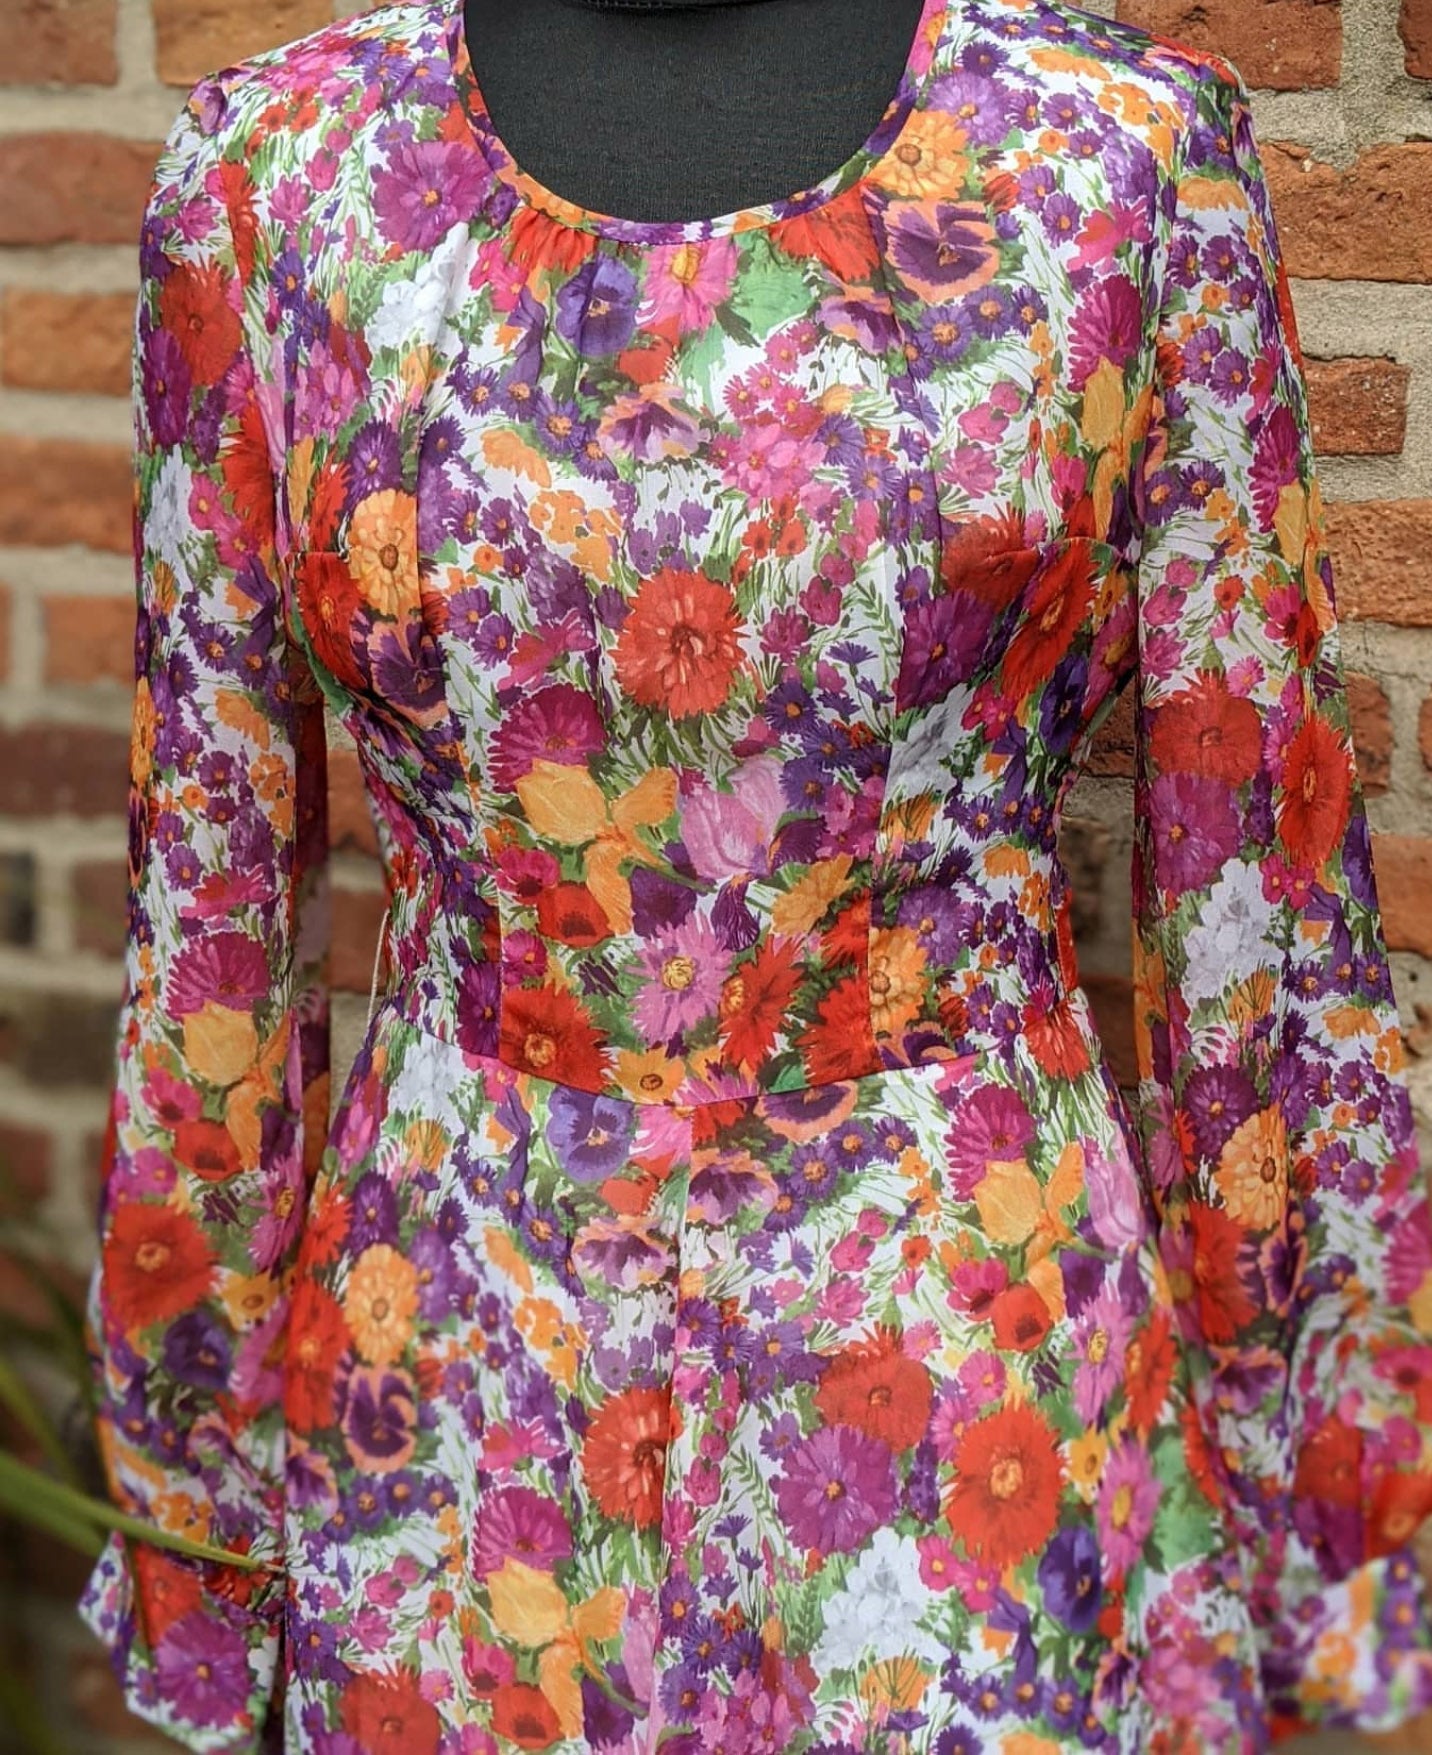 Vintage garden print dress, approx size 10